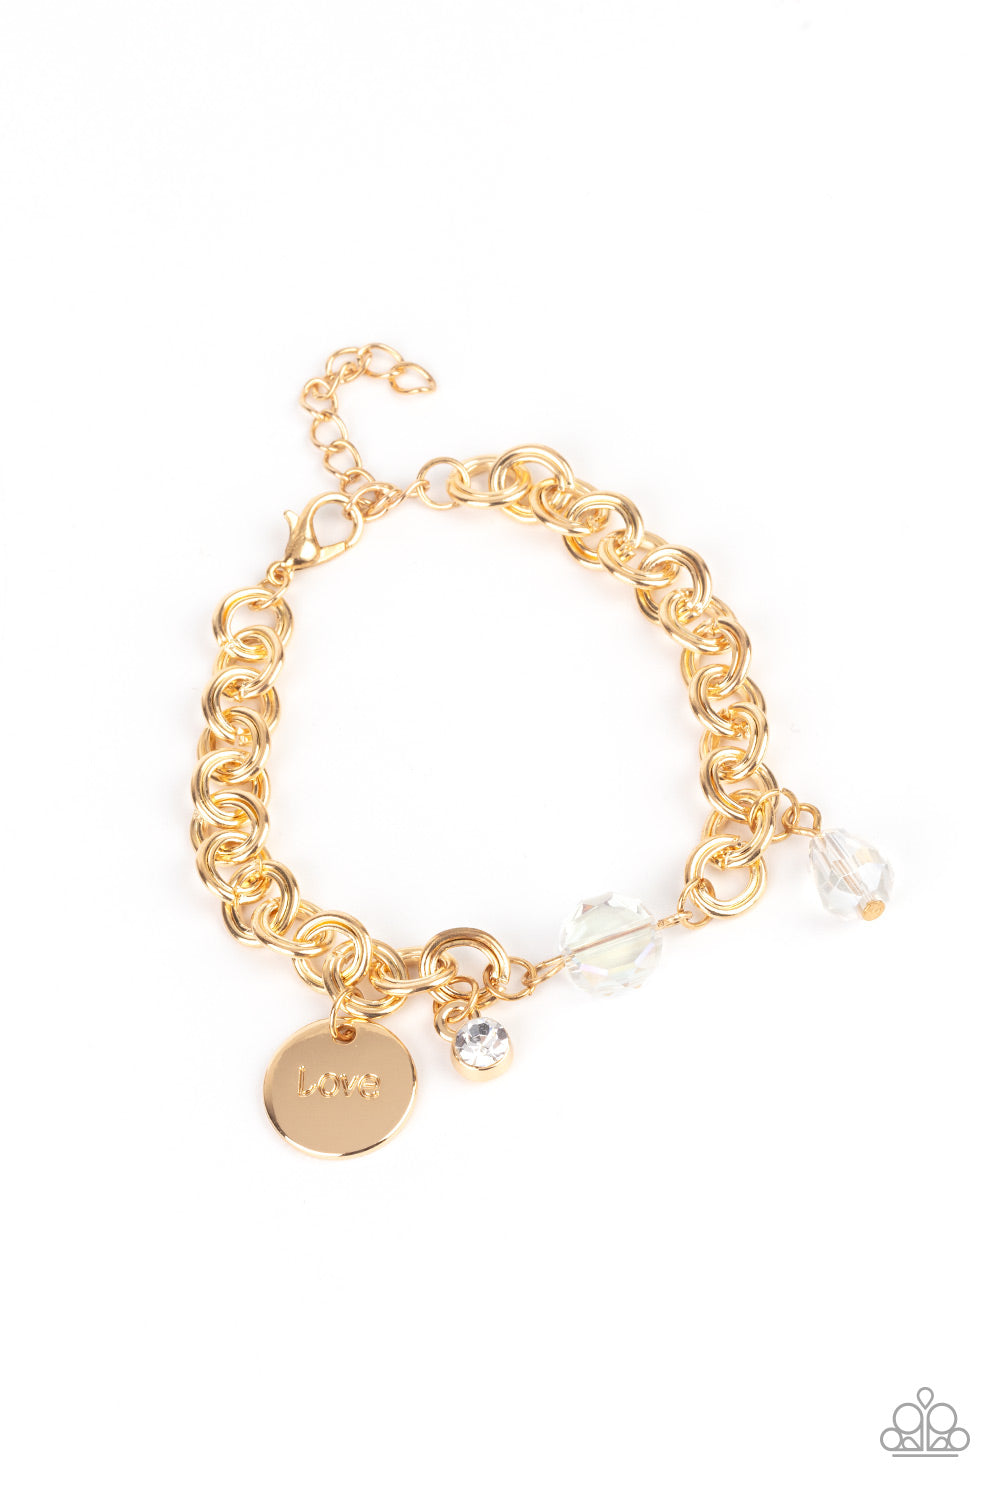 Lovable Luster Gold Bracelet - Paparazzi Accessories